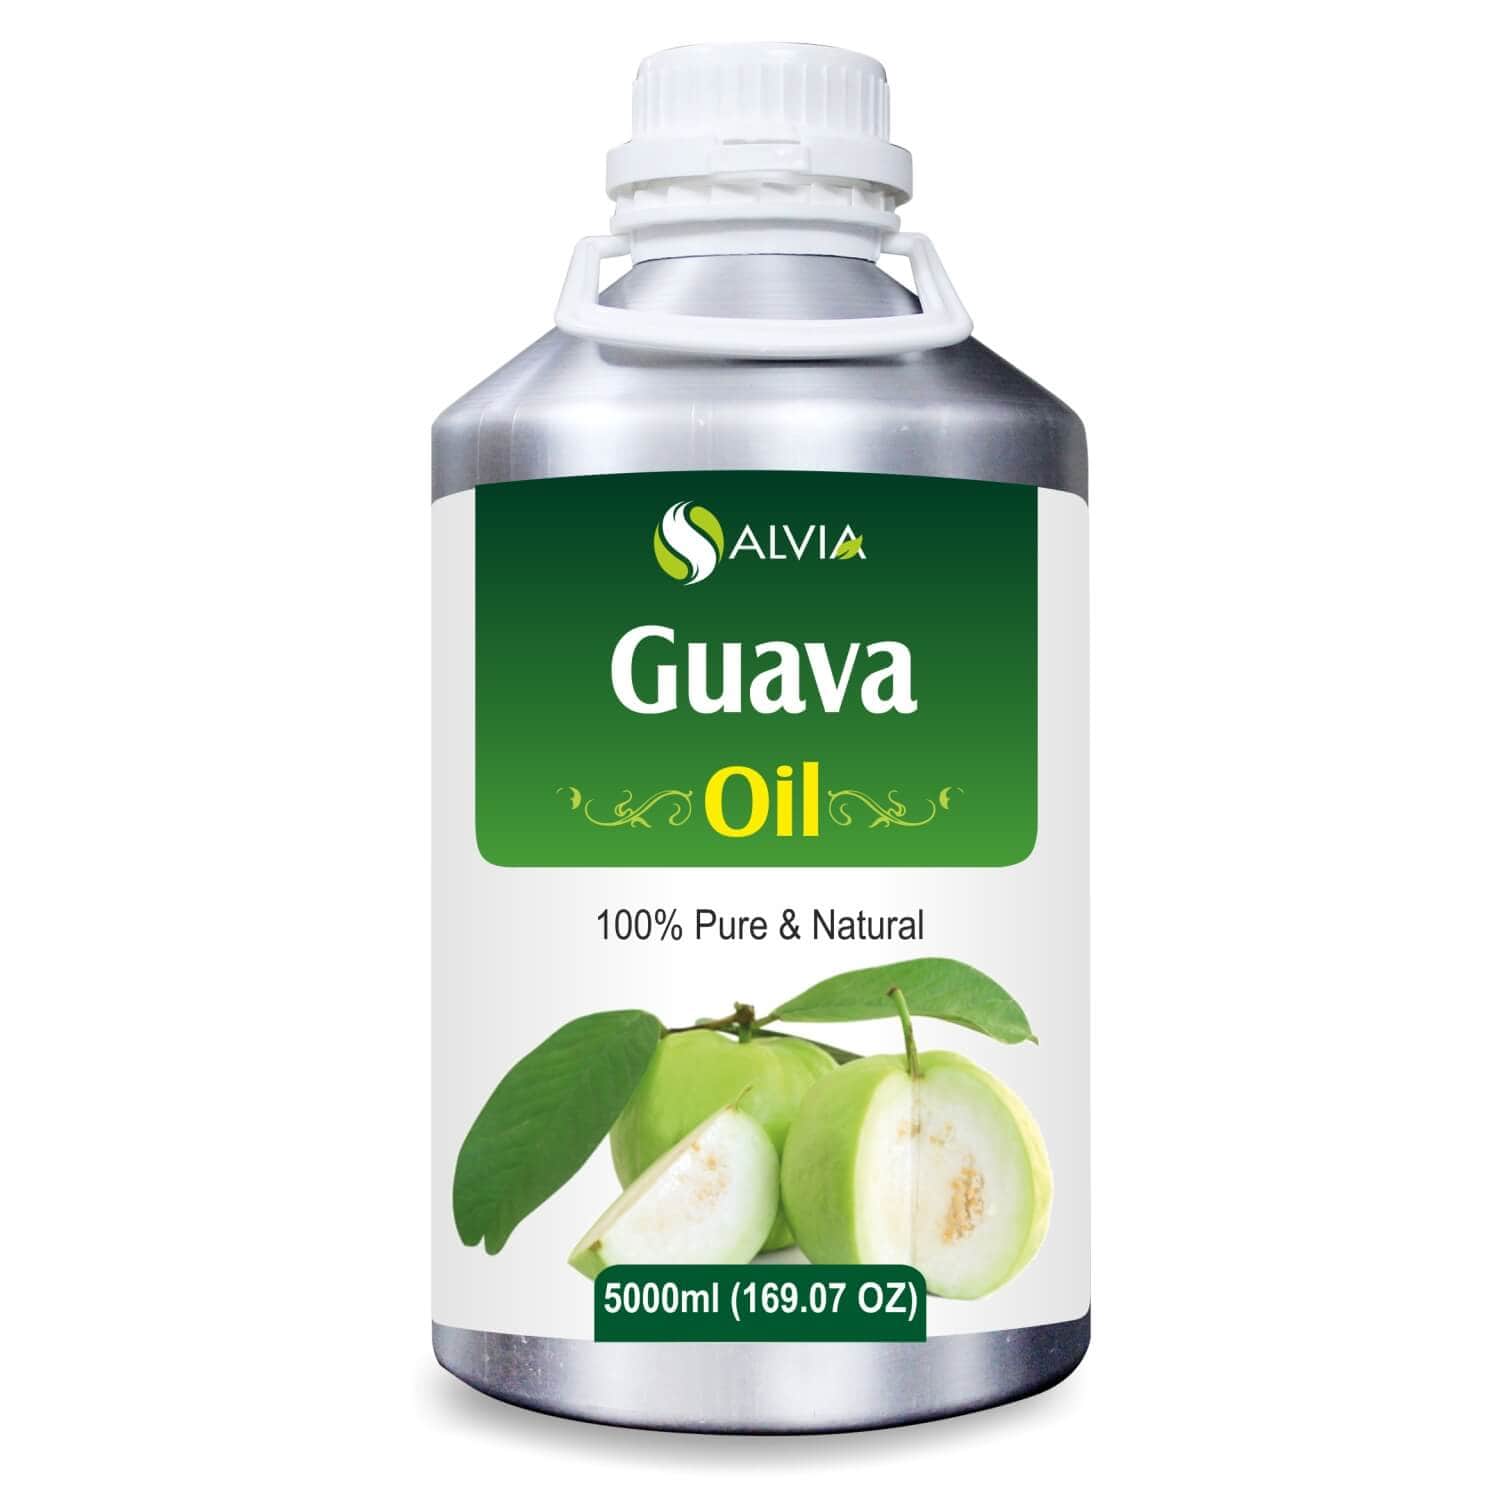 Salvia Natural Carrier Oils 5000ml Guava Oil (Psidium Guajava) 100% Natural Pure Carrier Oil Prevents Dandruff, Maintains Hair Health, Reduces Stretch Marks, Retains Moisture